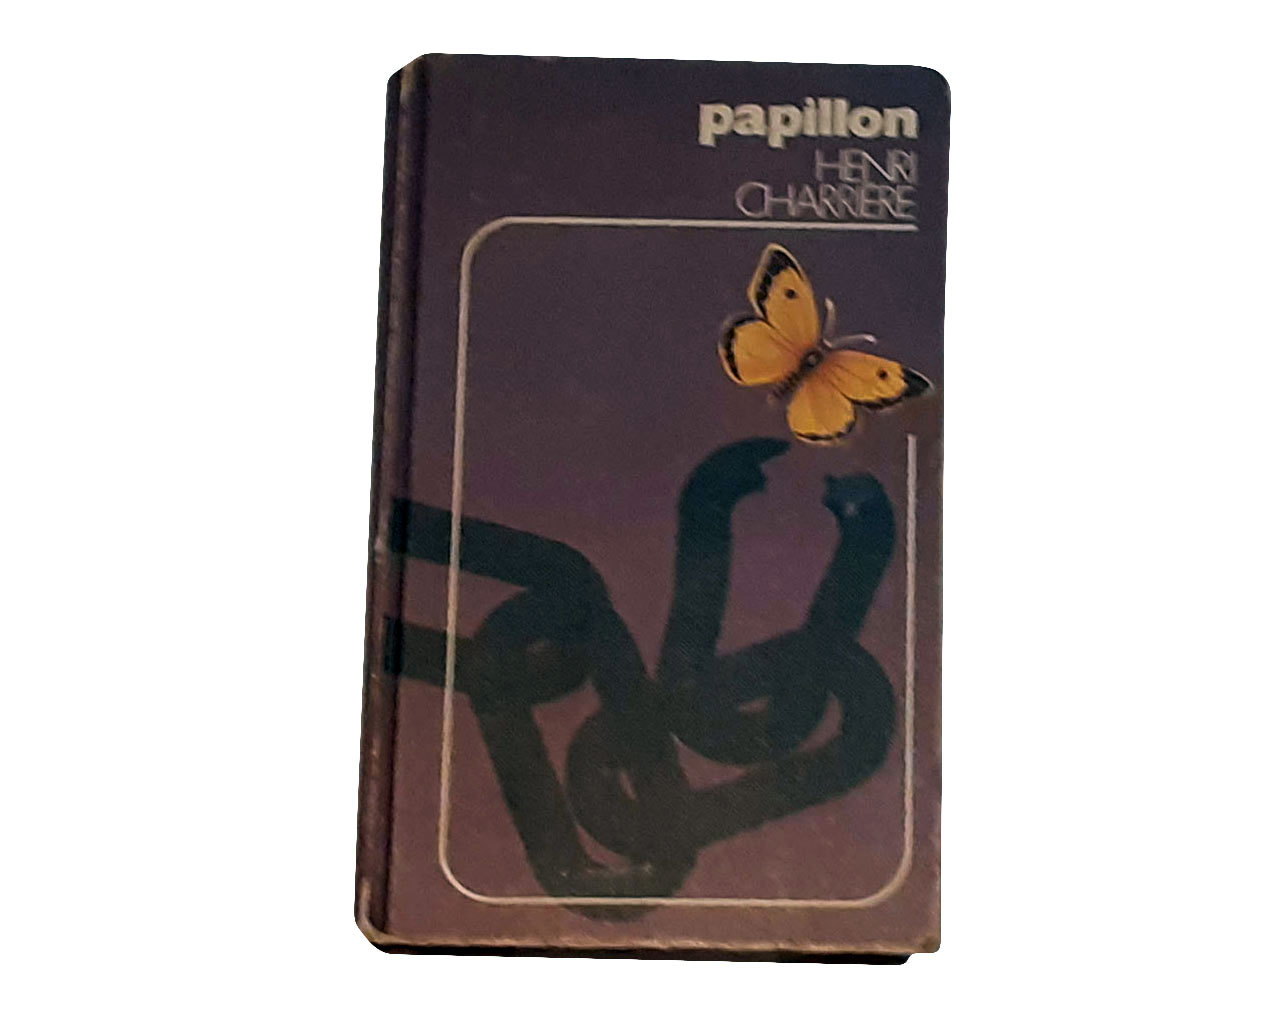 Livro: Papillon, de Henri Charriére - Capa Dura - Sem grifos